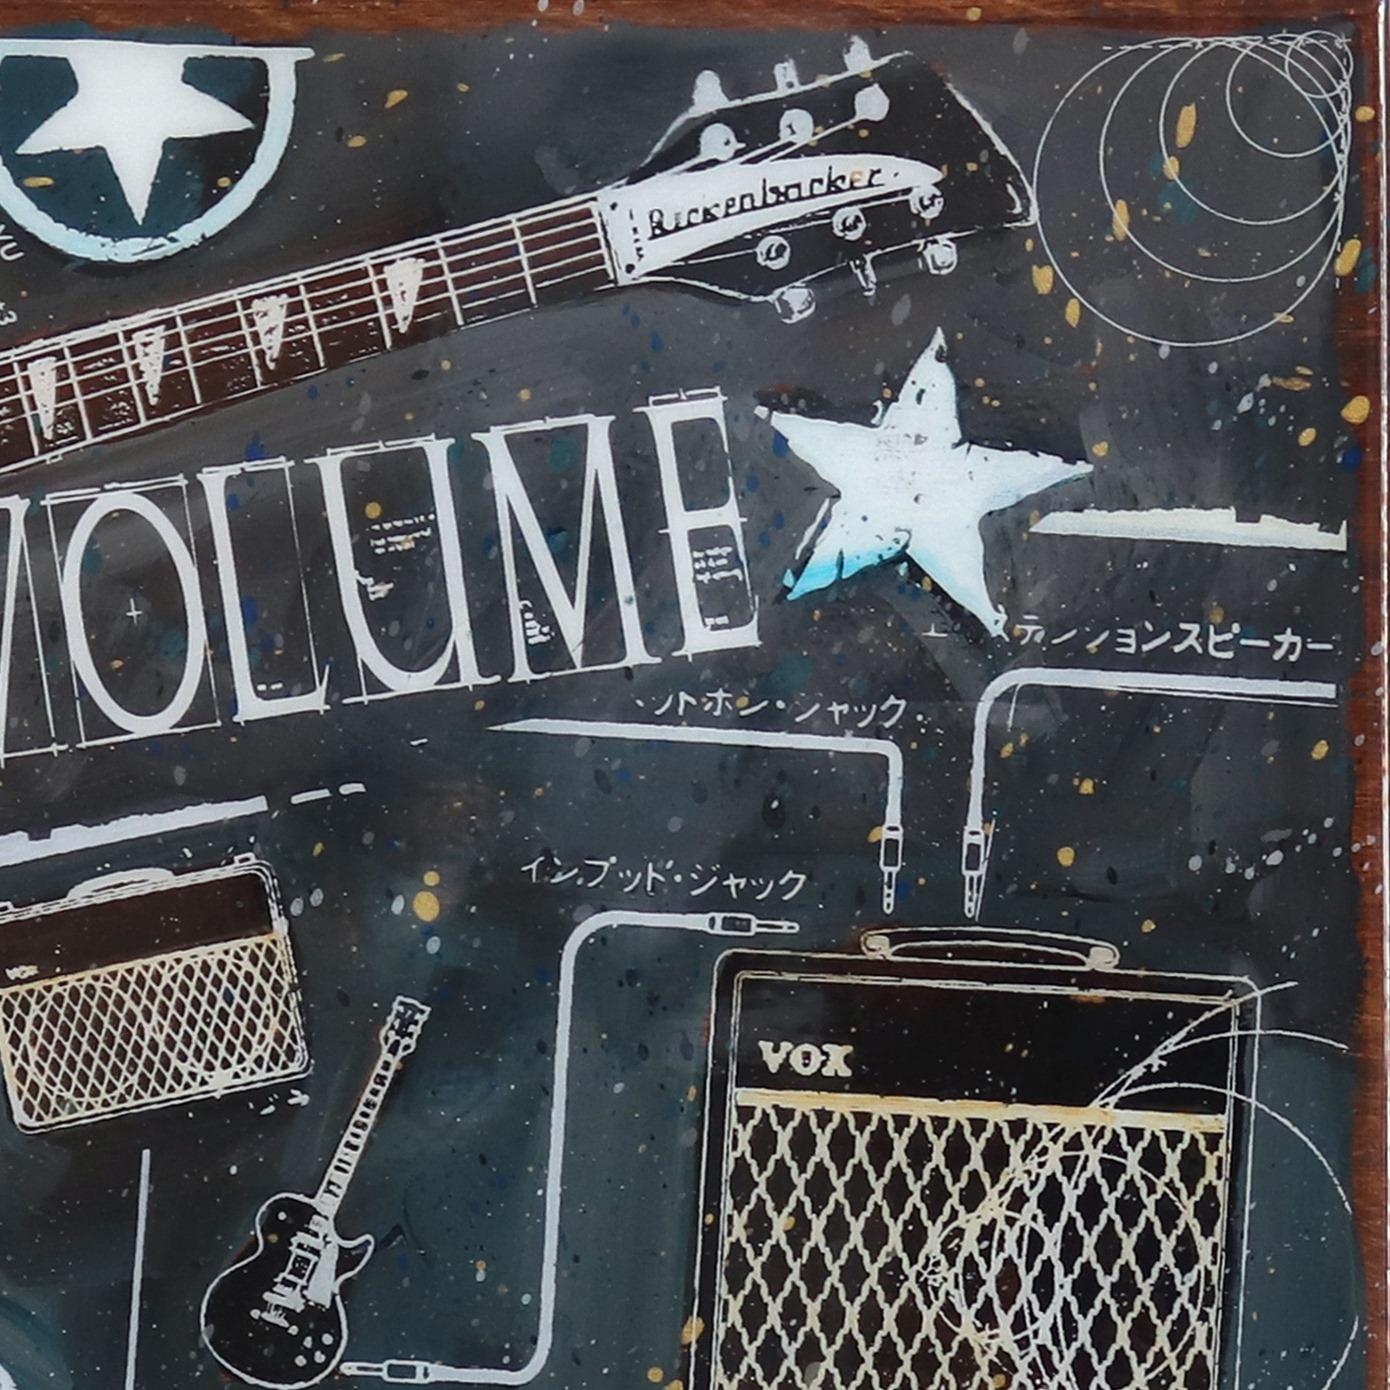 Volume! - Original Artwork Music Instruments Guitar Keyboard Amplifier Painting For Sale 1